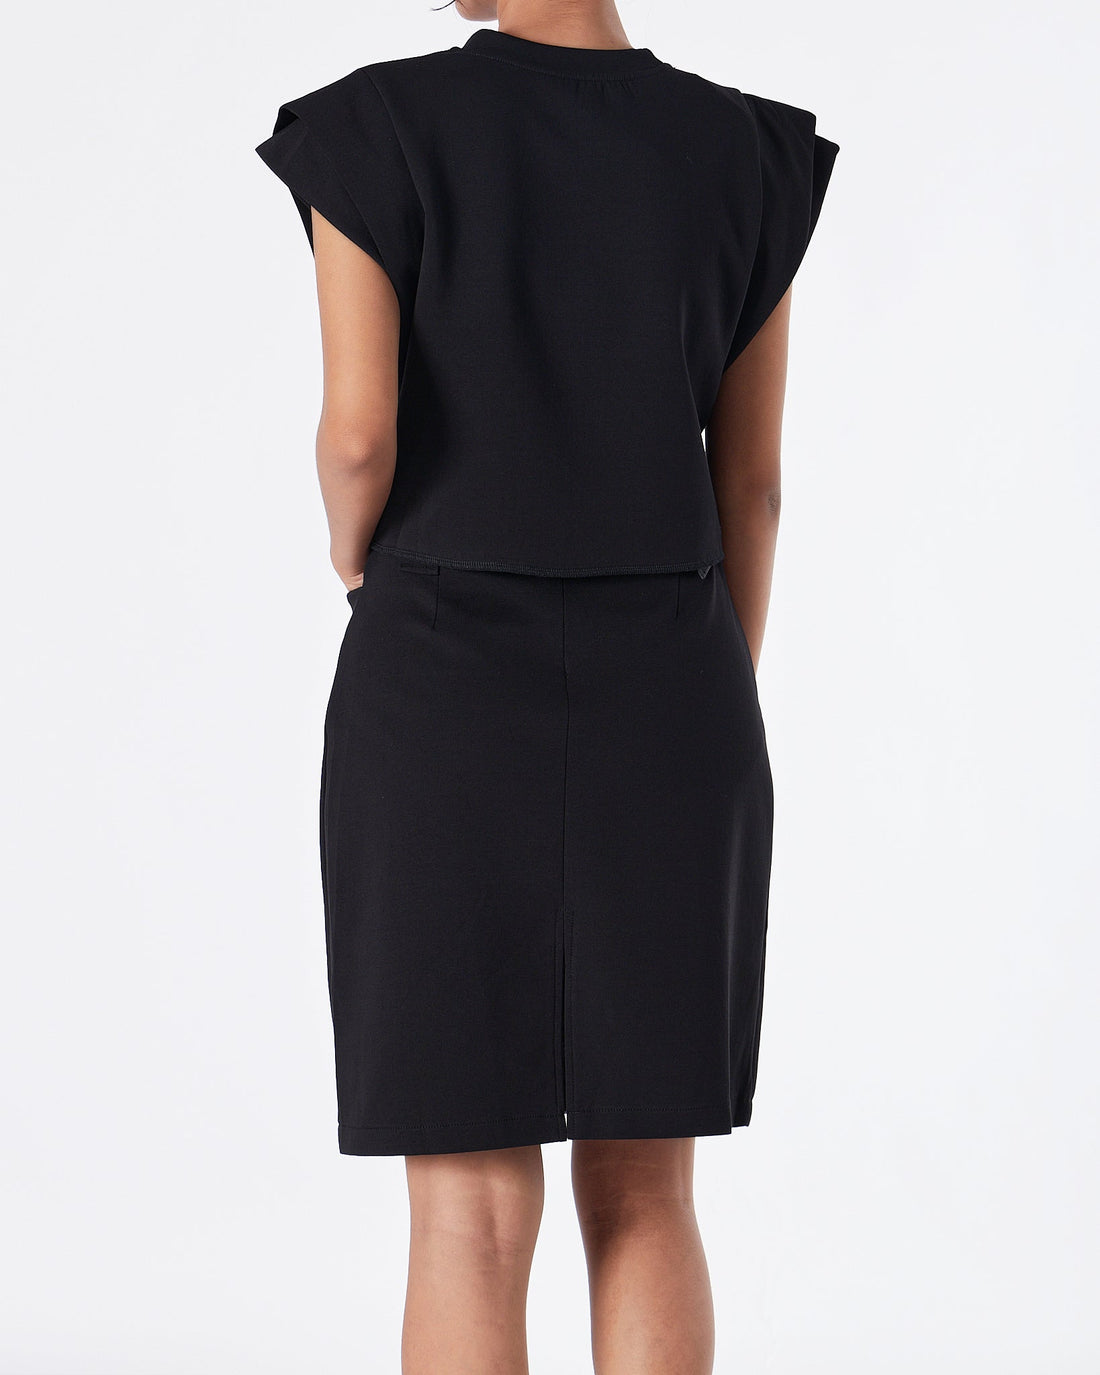 MOI OUTFIT-PD Milano Lady Black Set T-Shirt +Skirt 2pcs 84.90